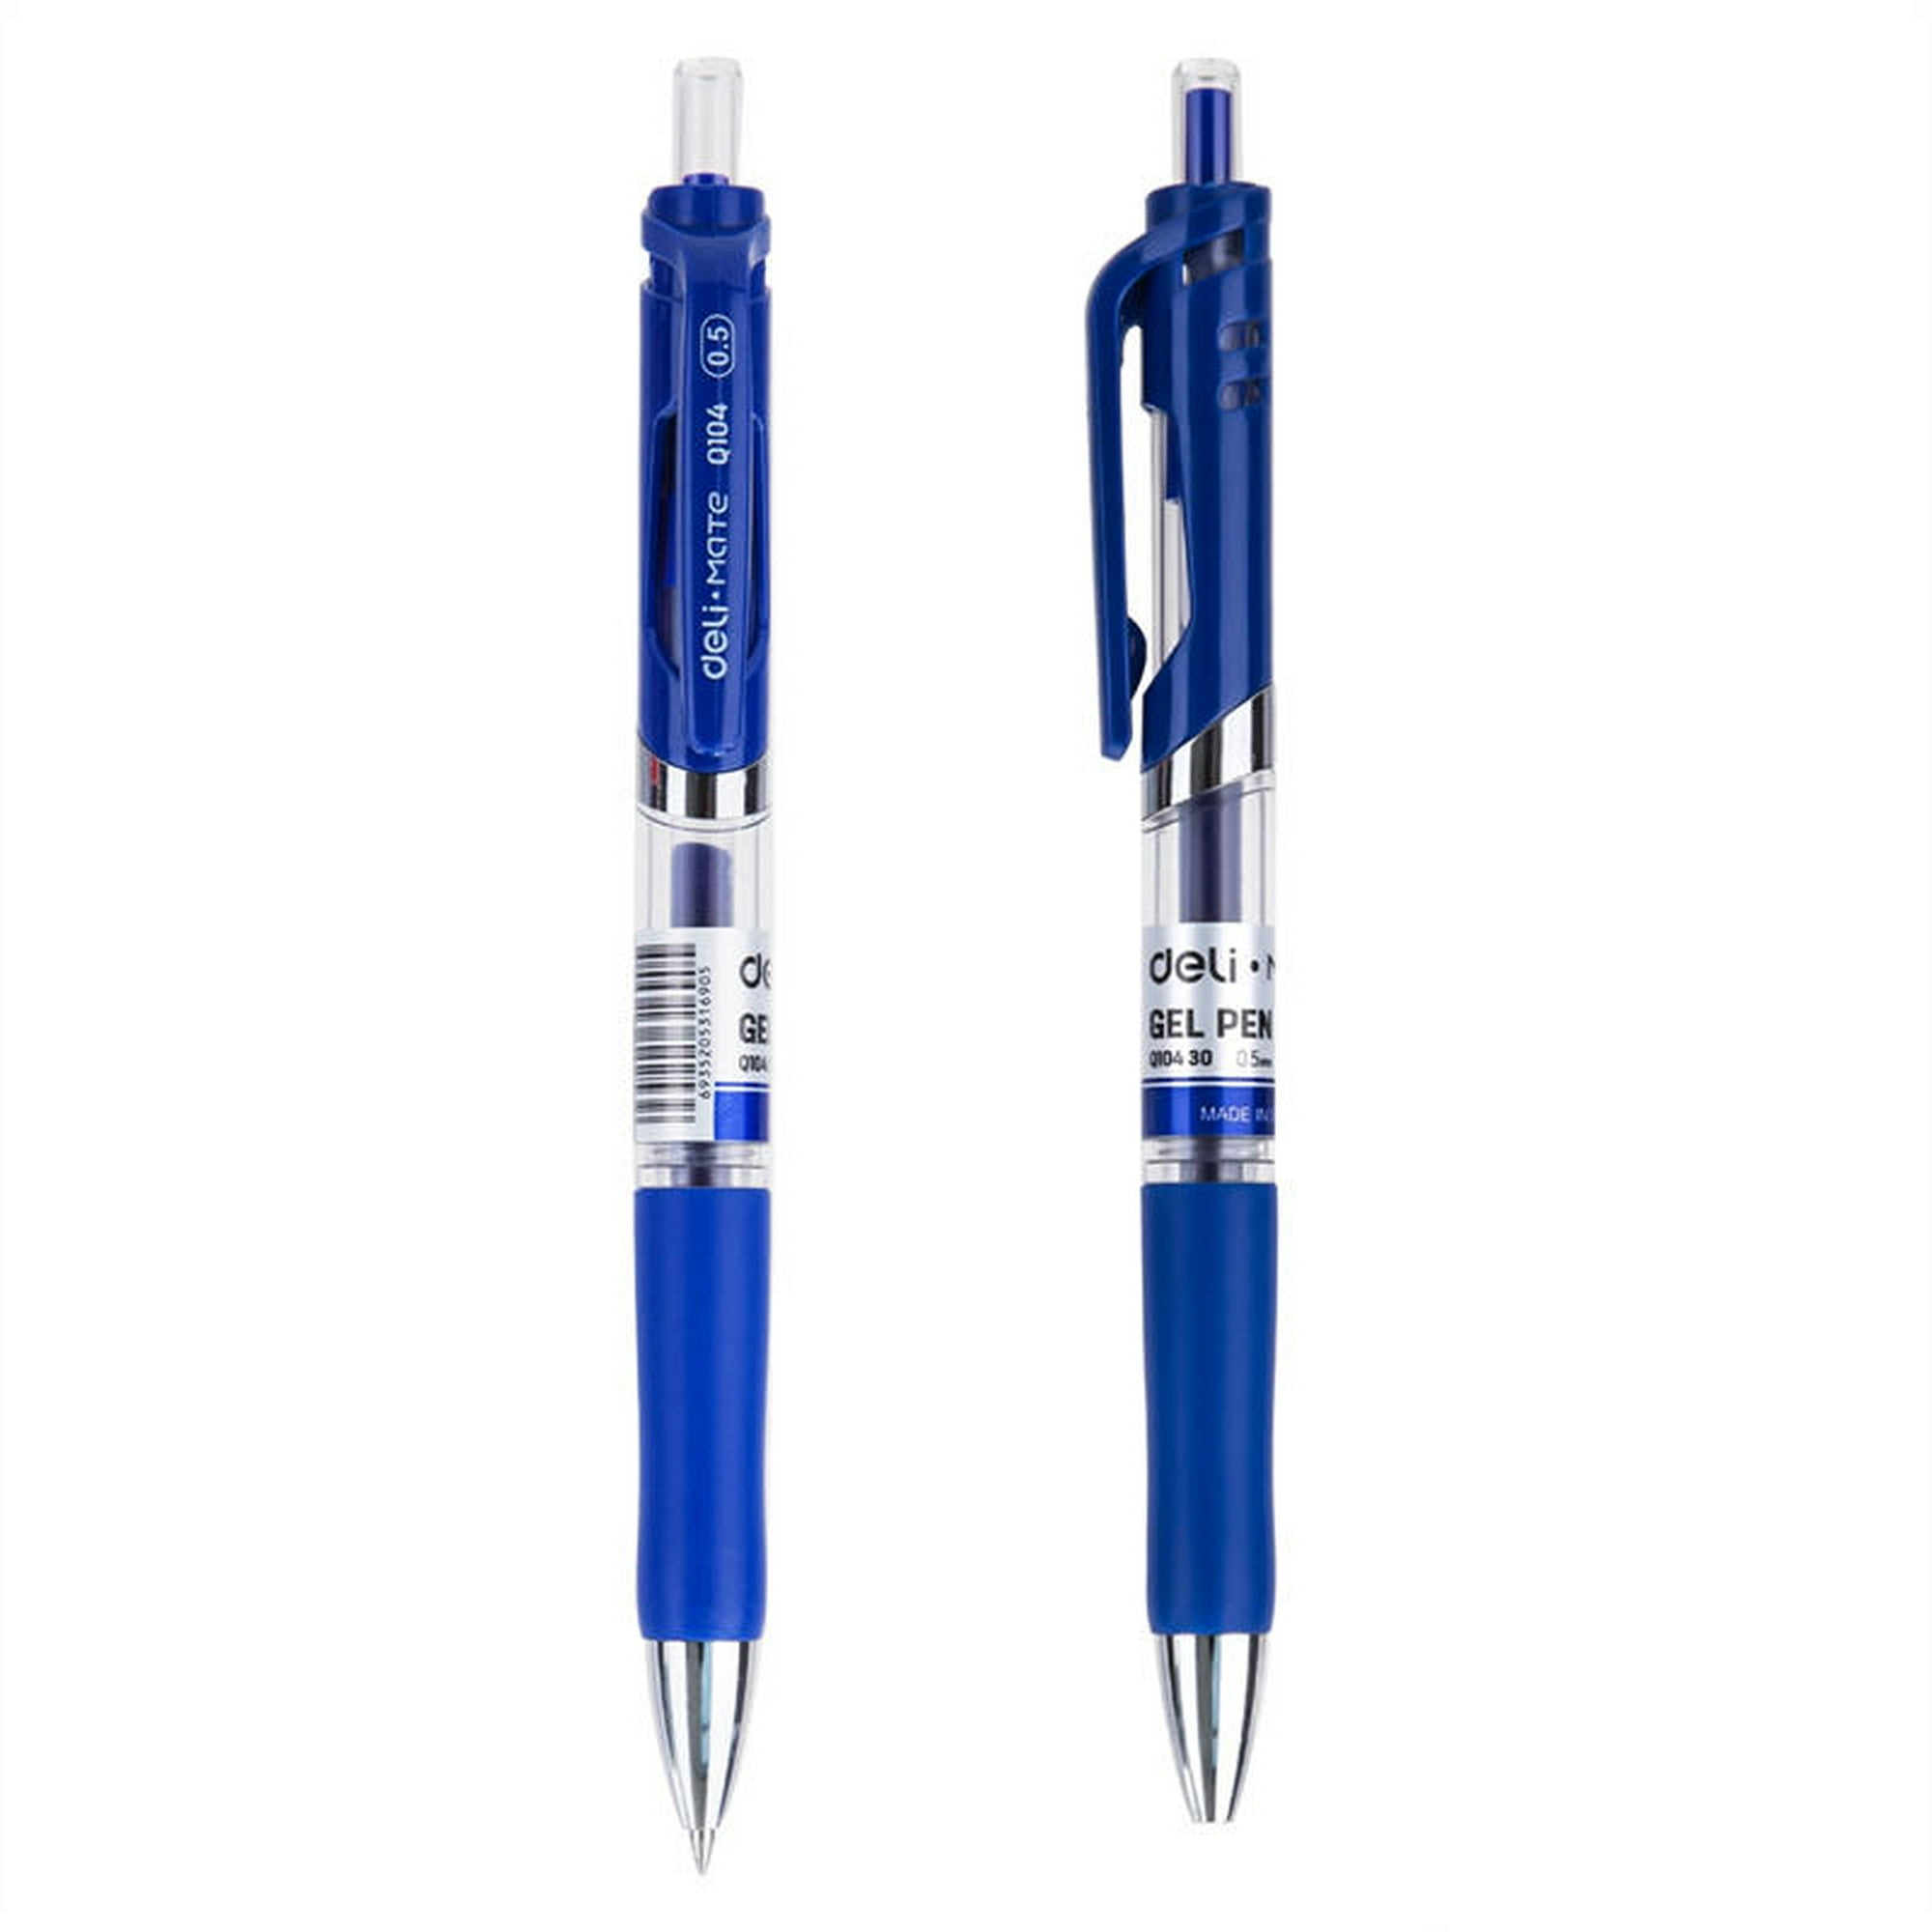 Bolígrafos de Gel retráctiles DELI, bolígrafo de tinta de Gel de 0